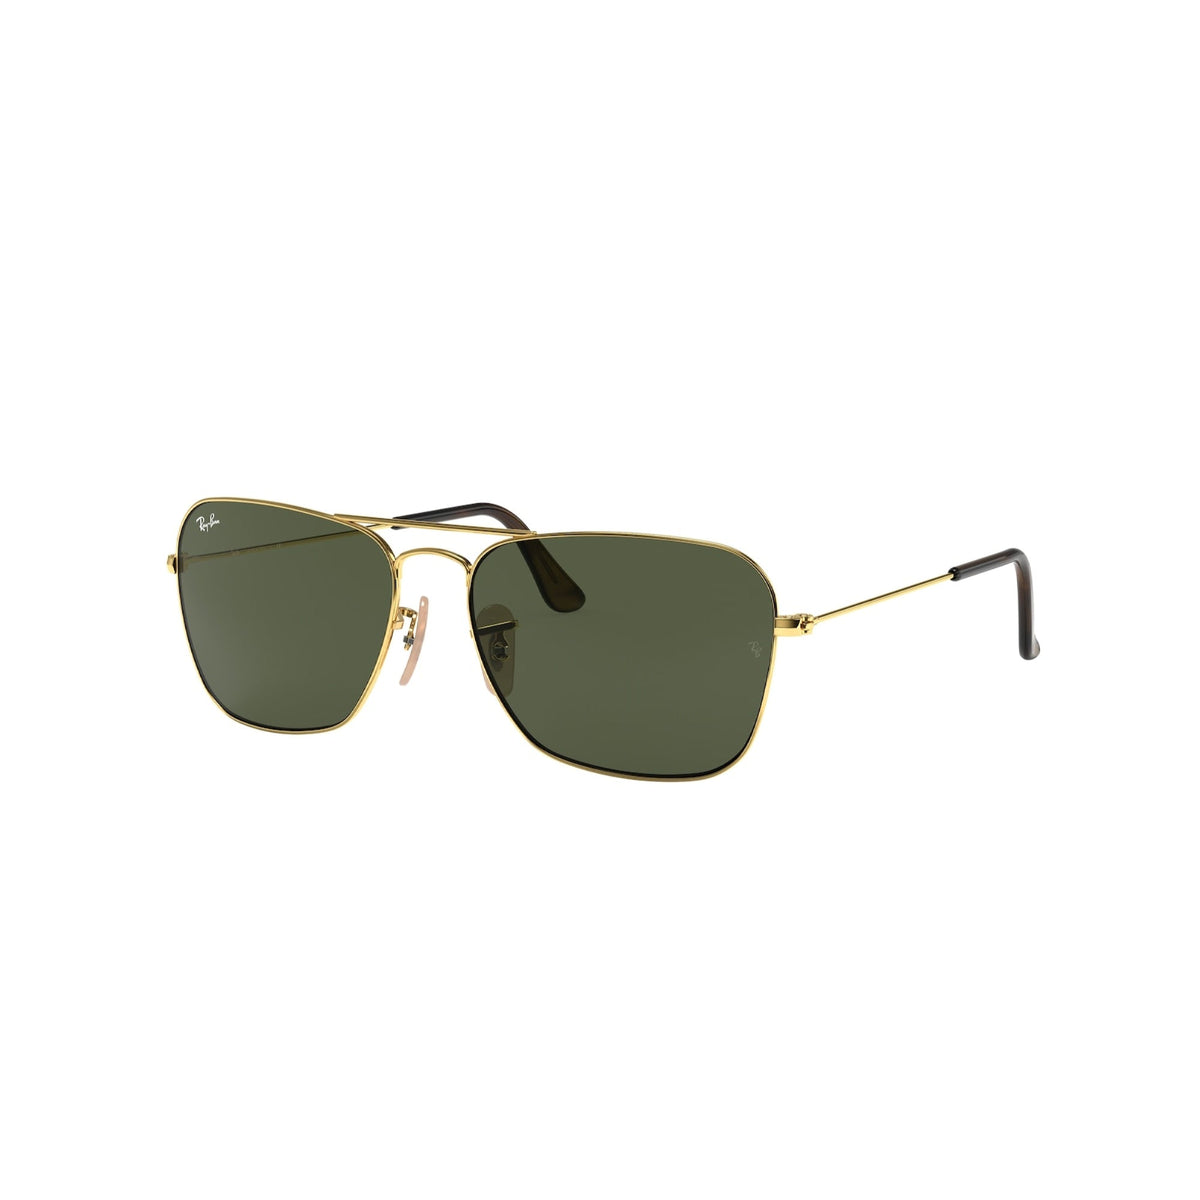 Ray-Ban Unisex Sunglasses Caravan Gold G-15 Green Metal Metal  0RB3136 181 55